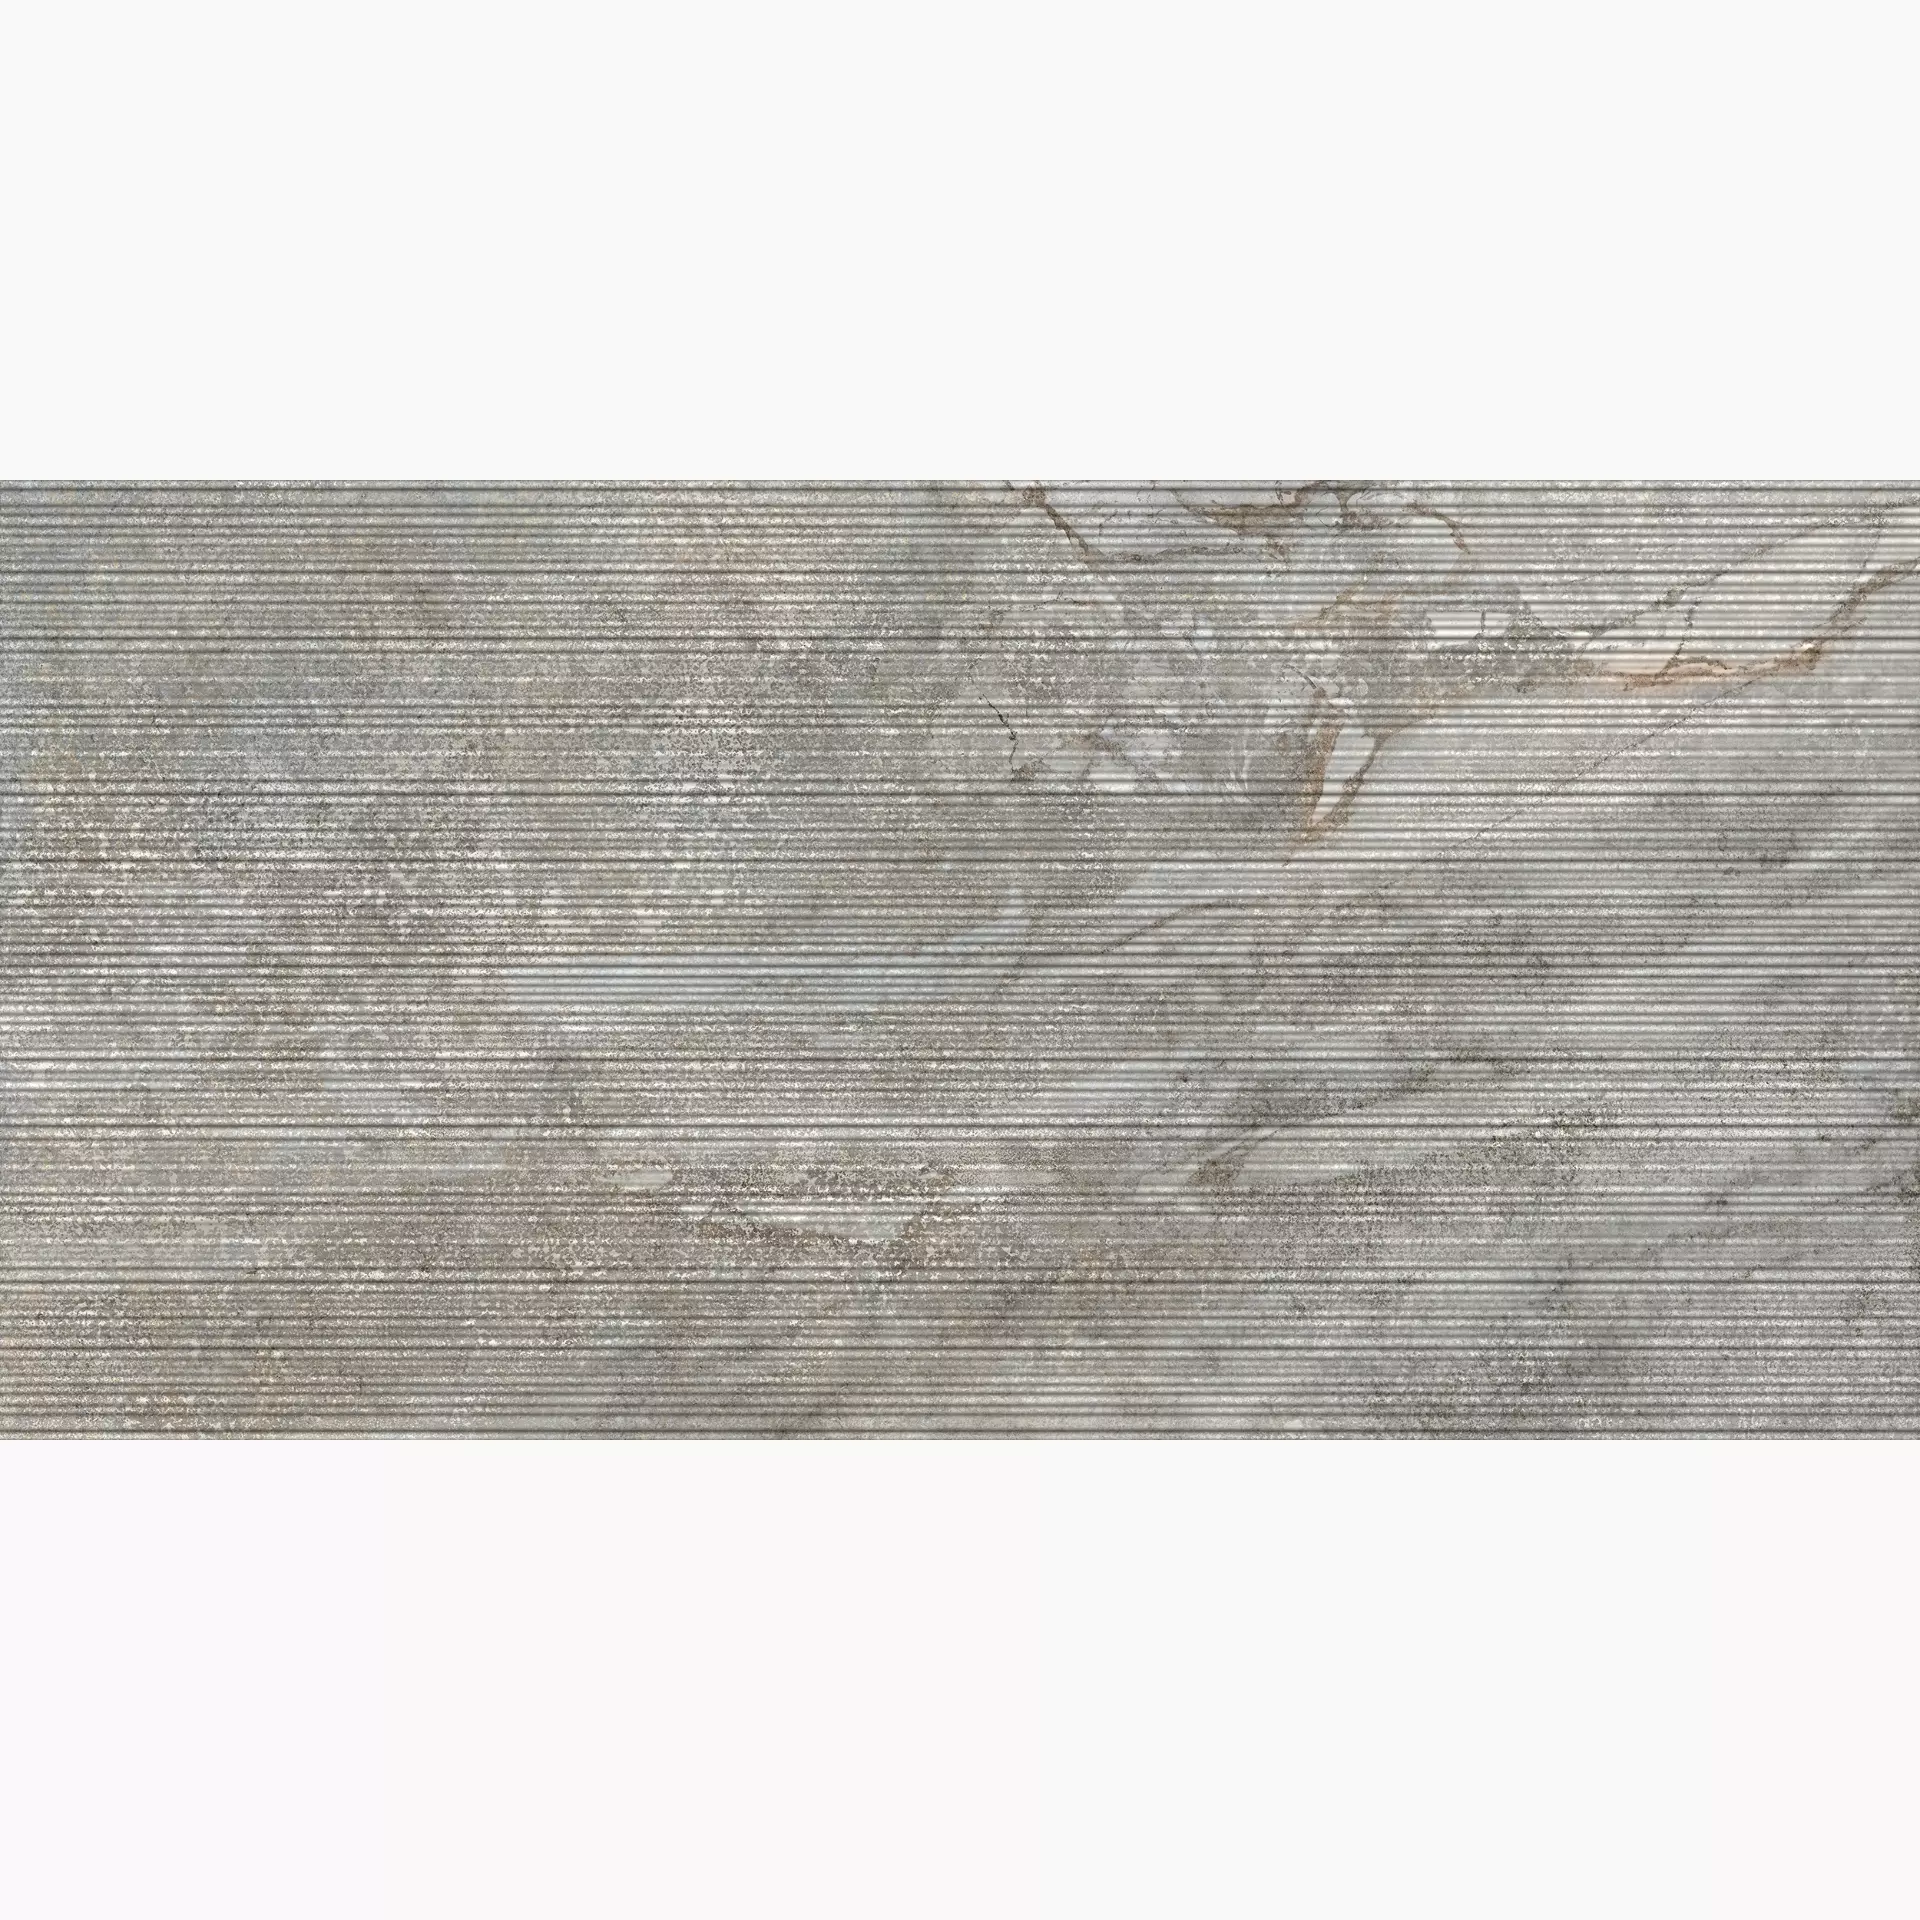 Fondovalle Upper Fog Natural Decor Stick UPP098 60x120cm rectified 8,5mm